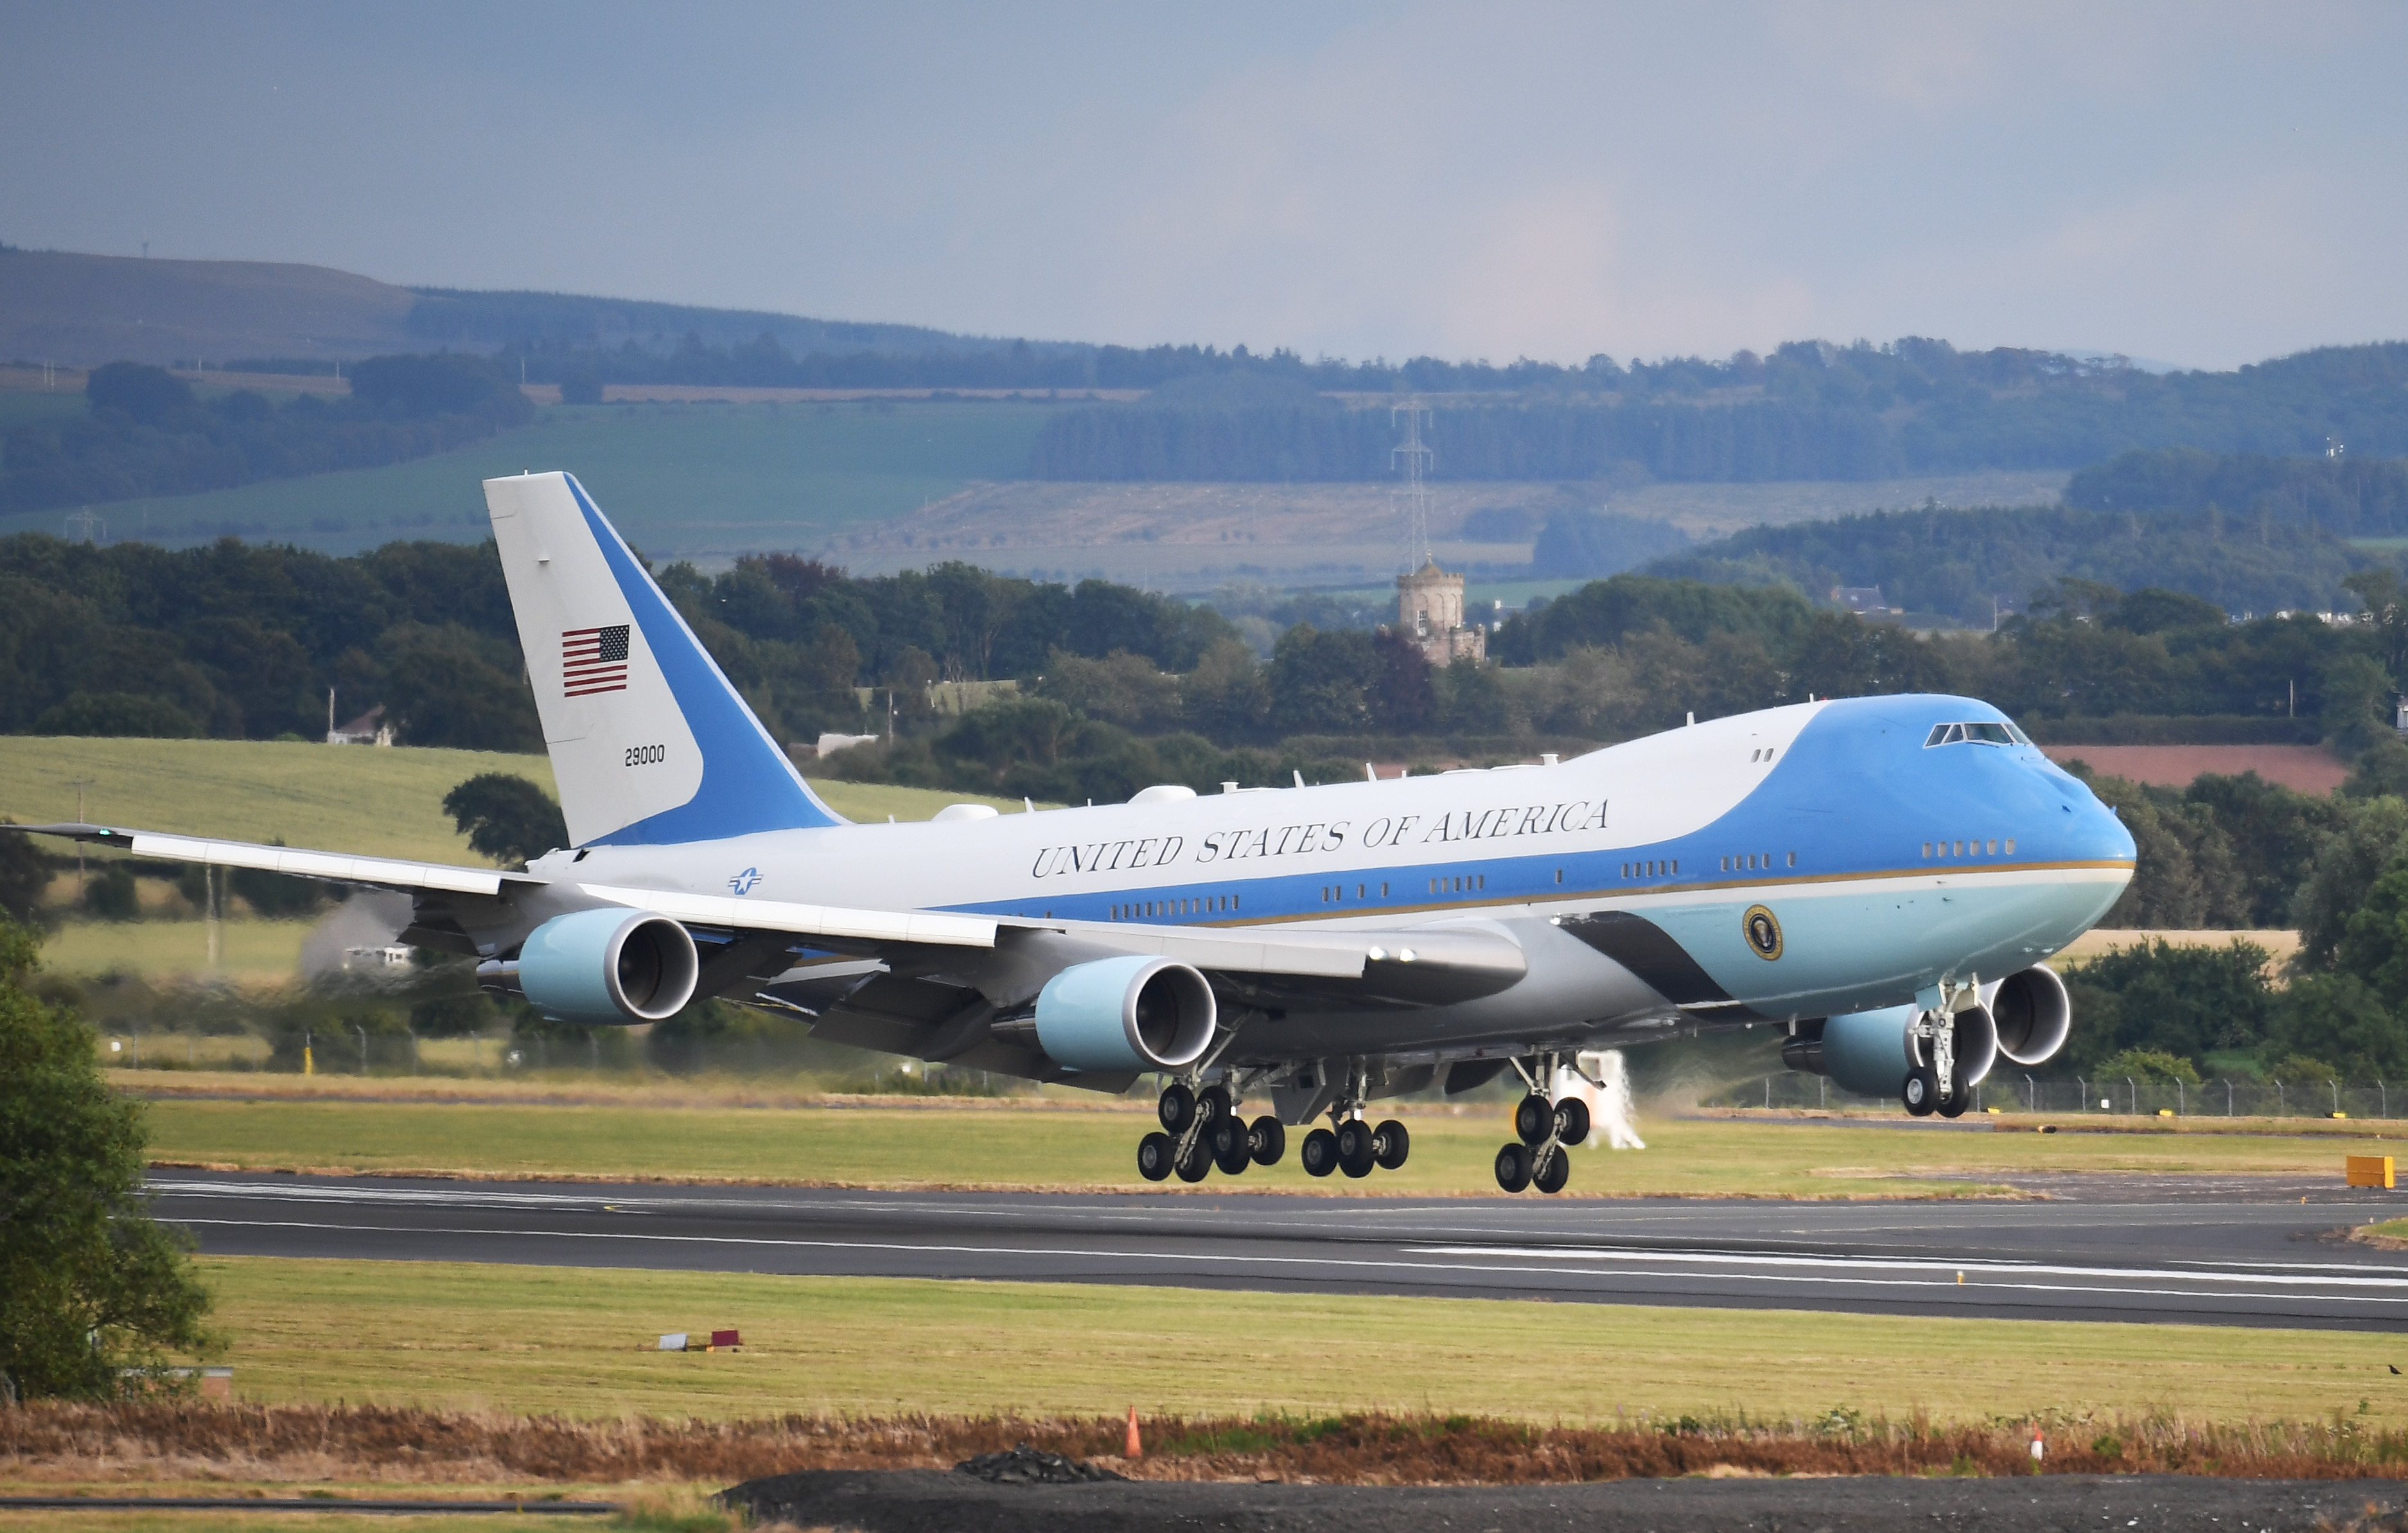 Самолеты на 1 человека. Boeing 747 Air Force one. Боинг 747 президента США. Air Force one Boeing 747-8. Самолет президента США Air Force one.